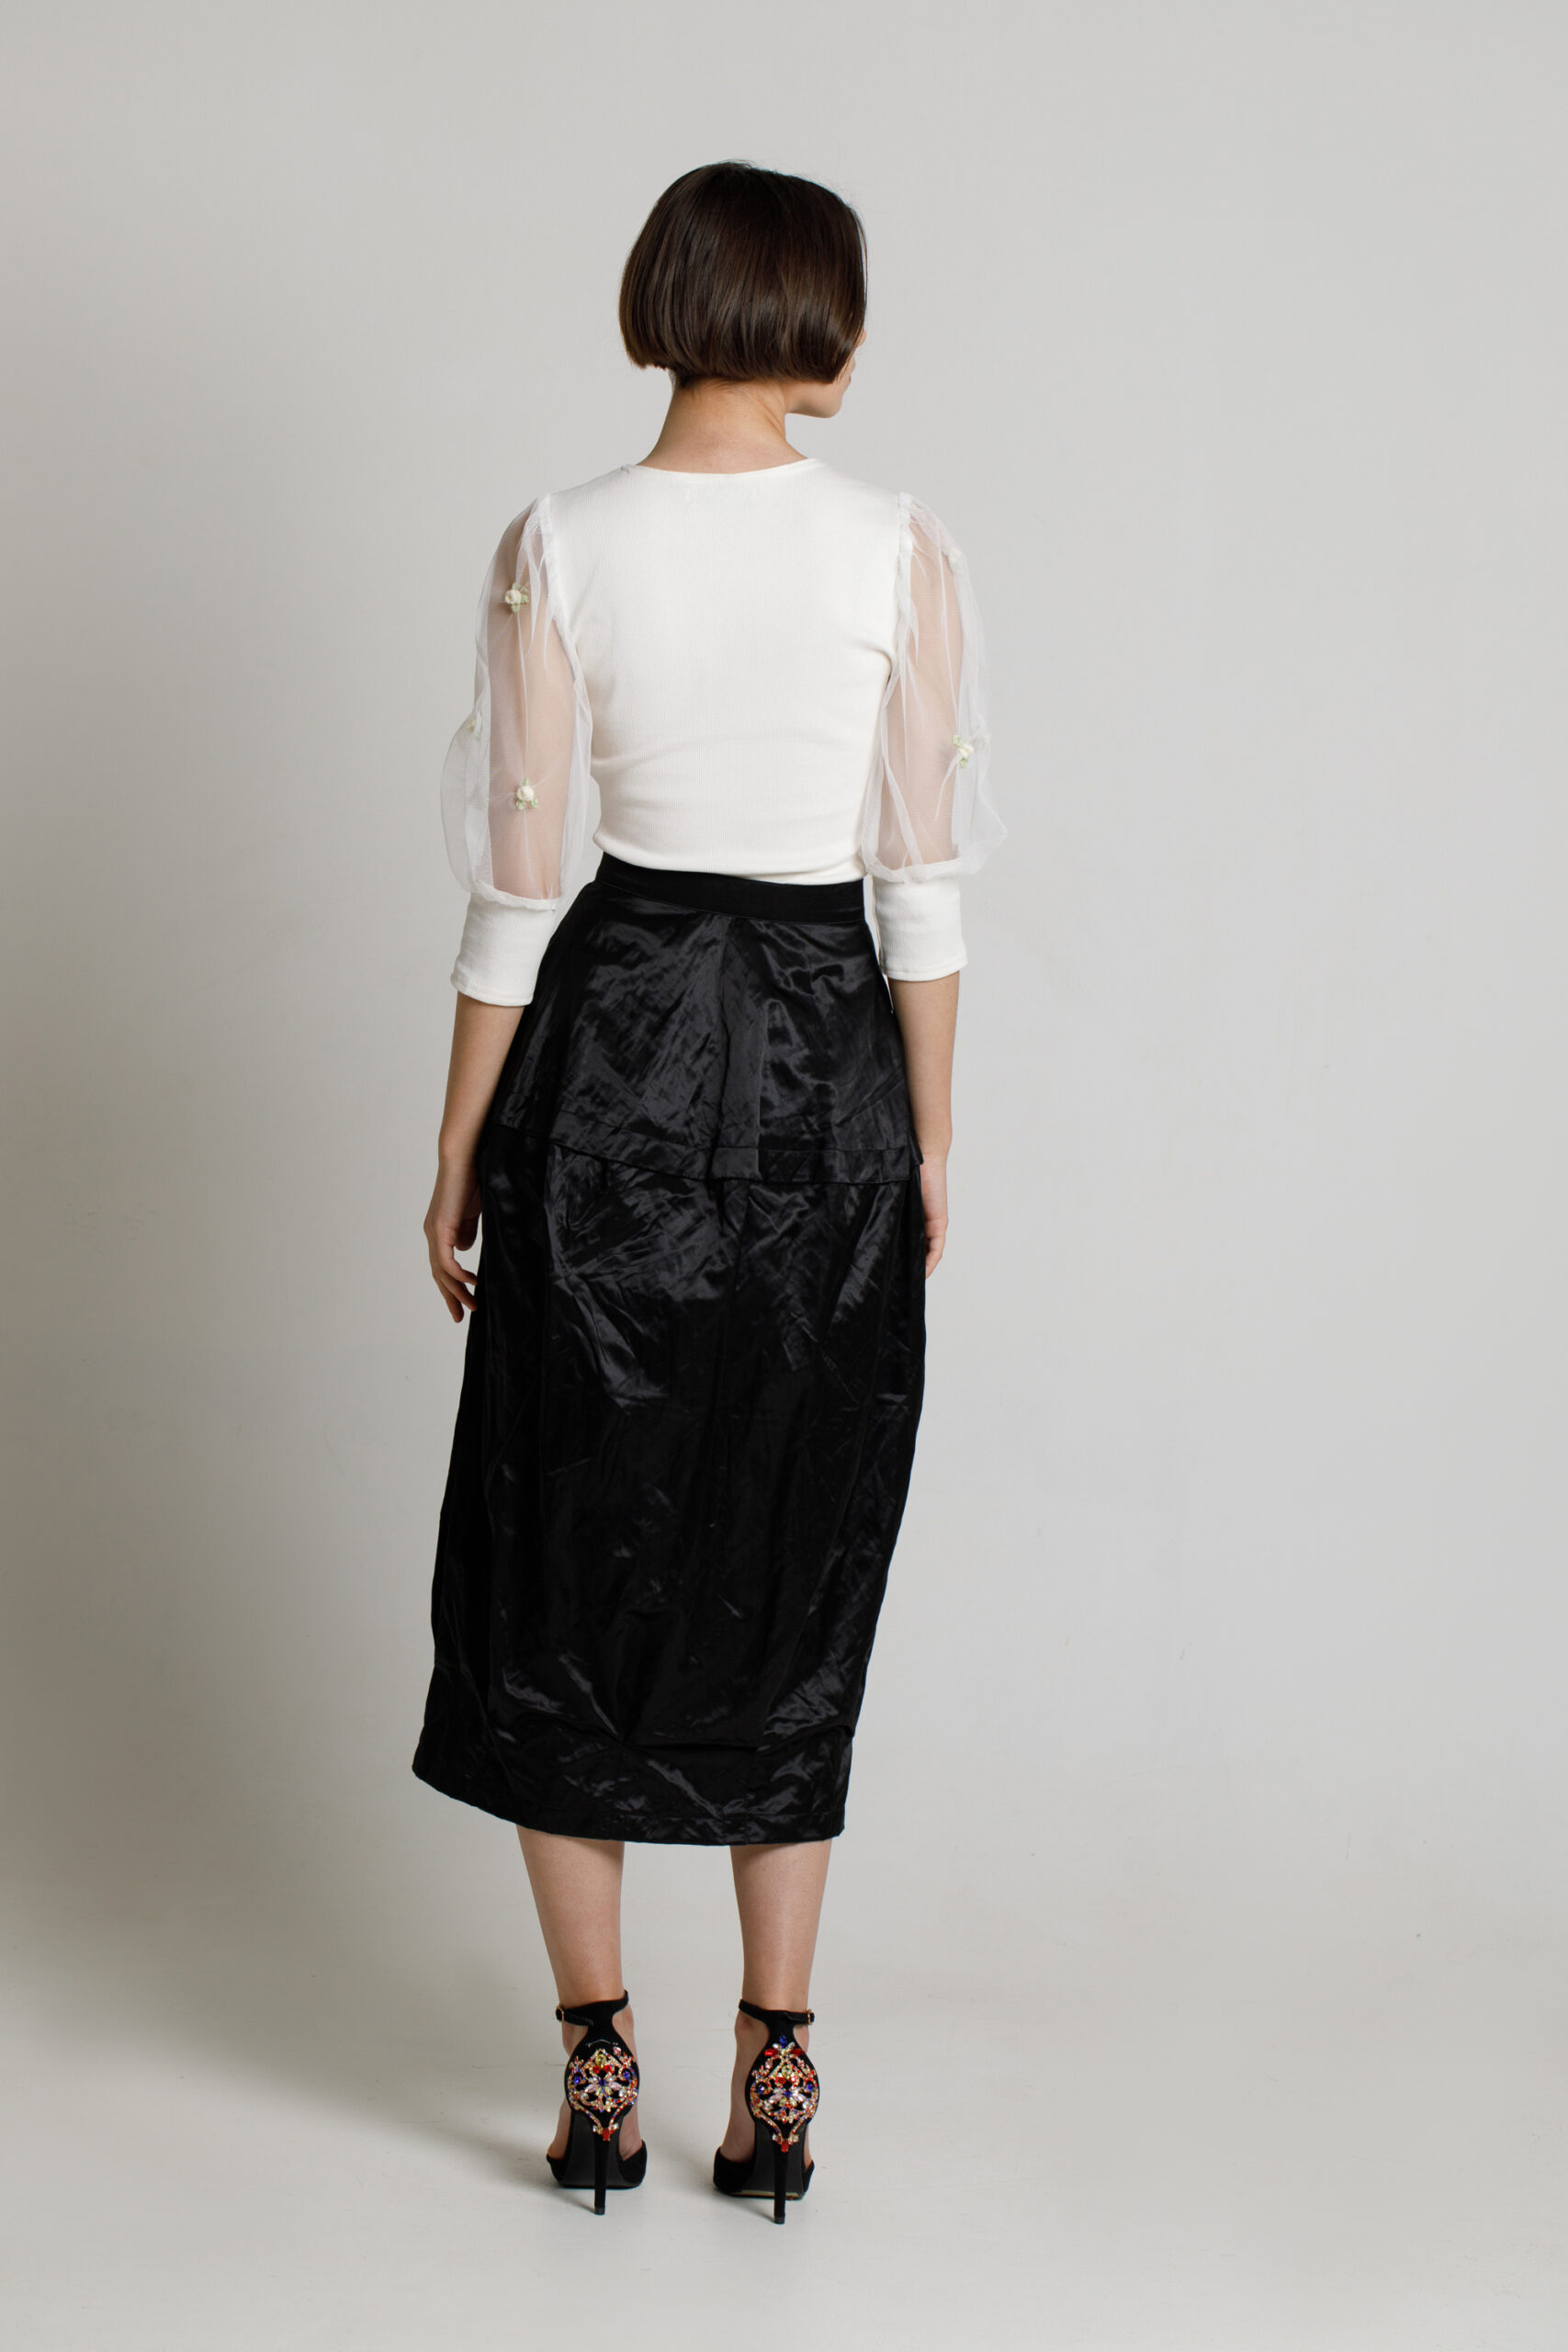 ANNE casual black taffeta skirt with buttons. Natural fabrics, original design, handmade embroidery